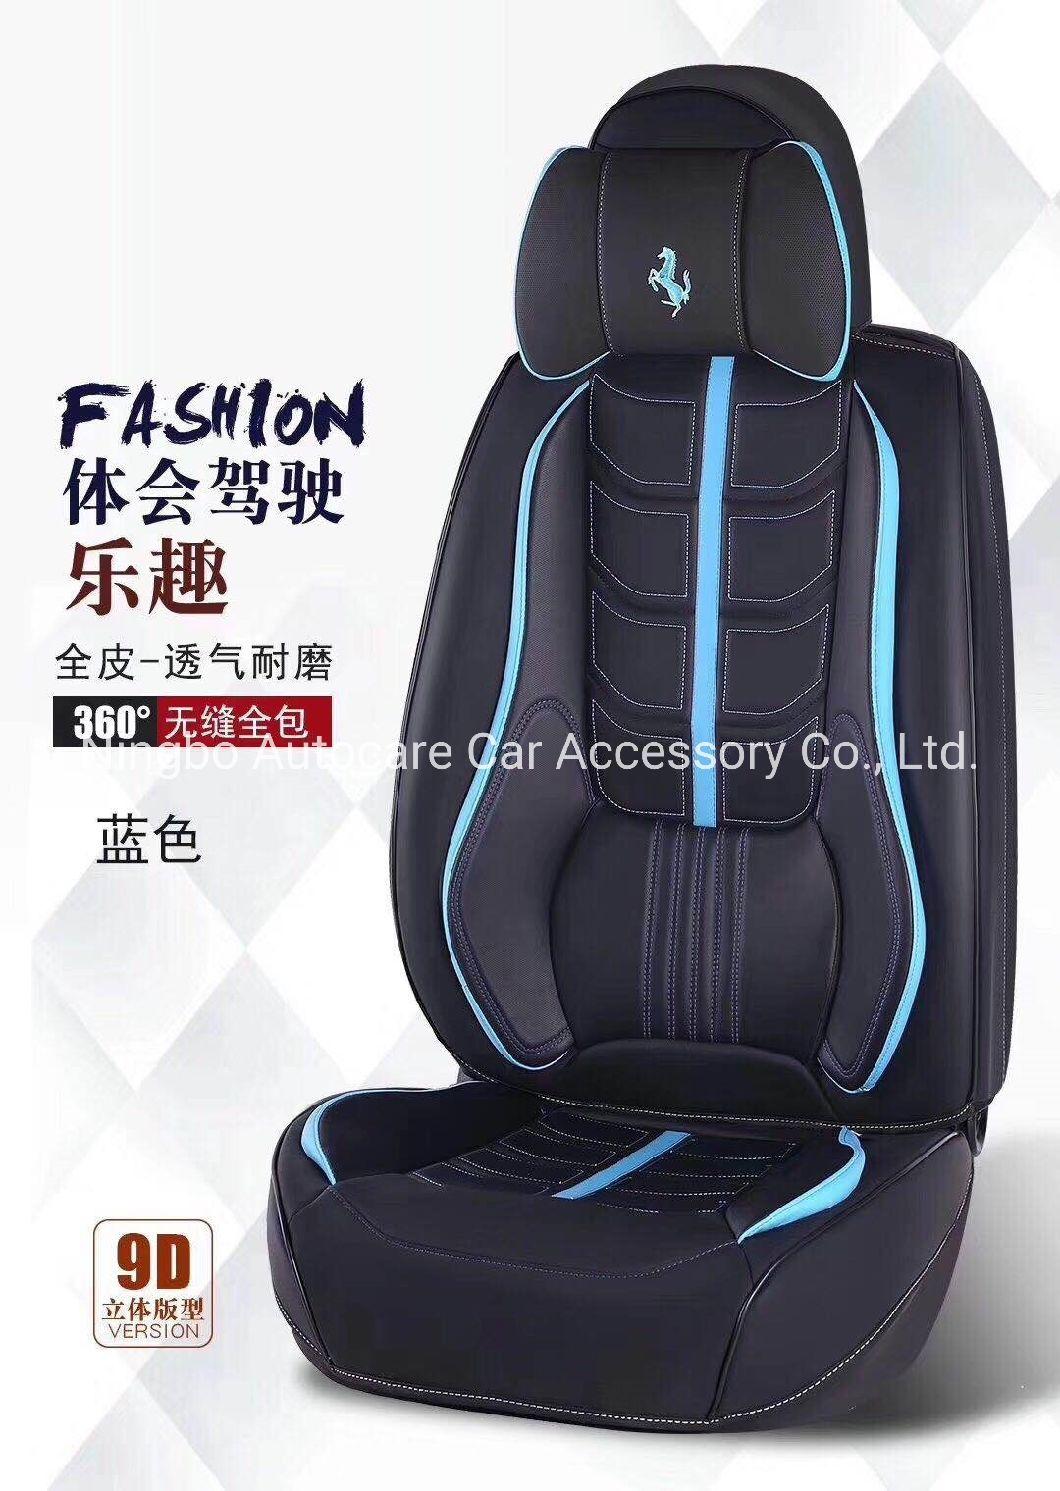 2021 Fashion Auto Car Accessory Car Decoration High Quality Car Seat Cover Universal Auto Car Seat Cover